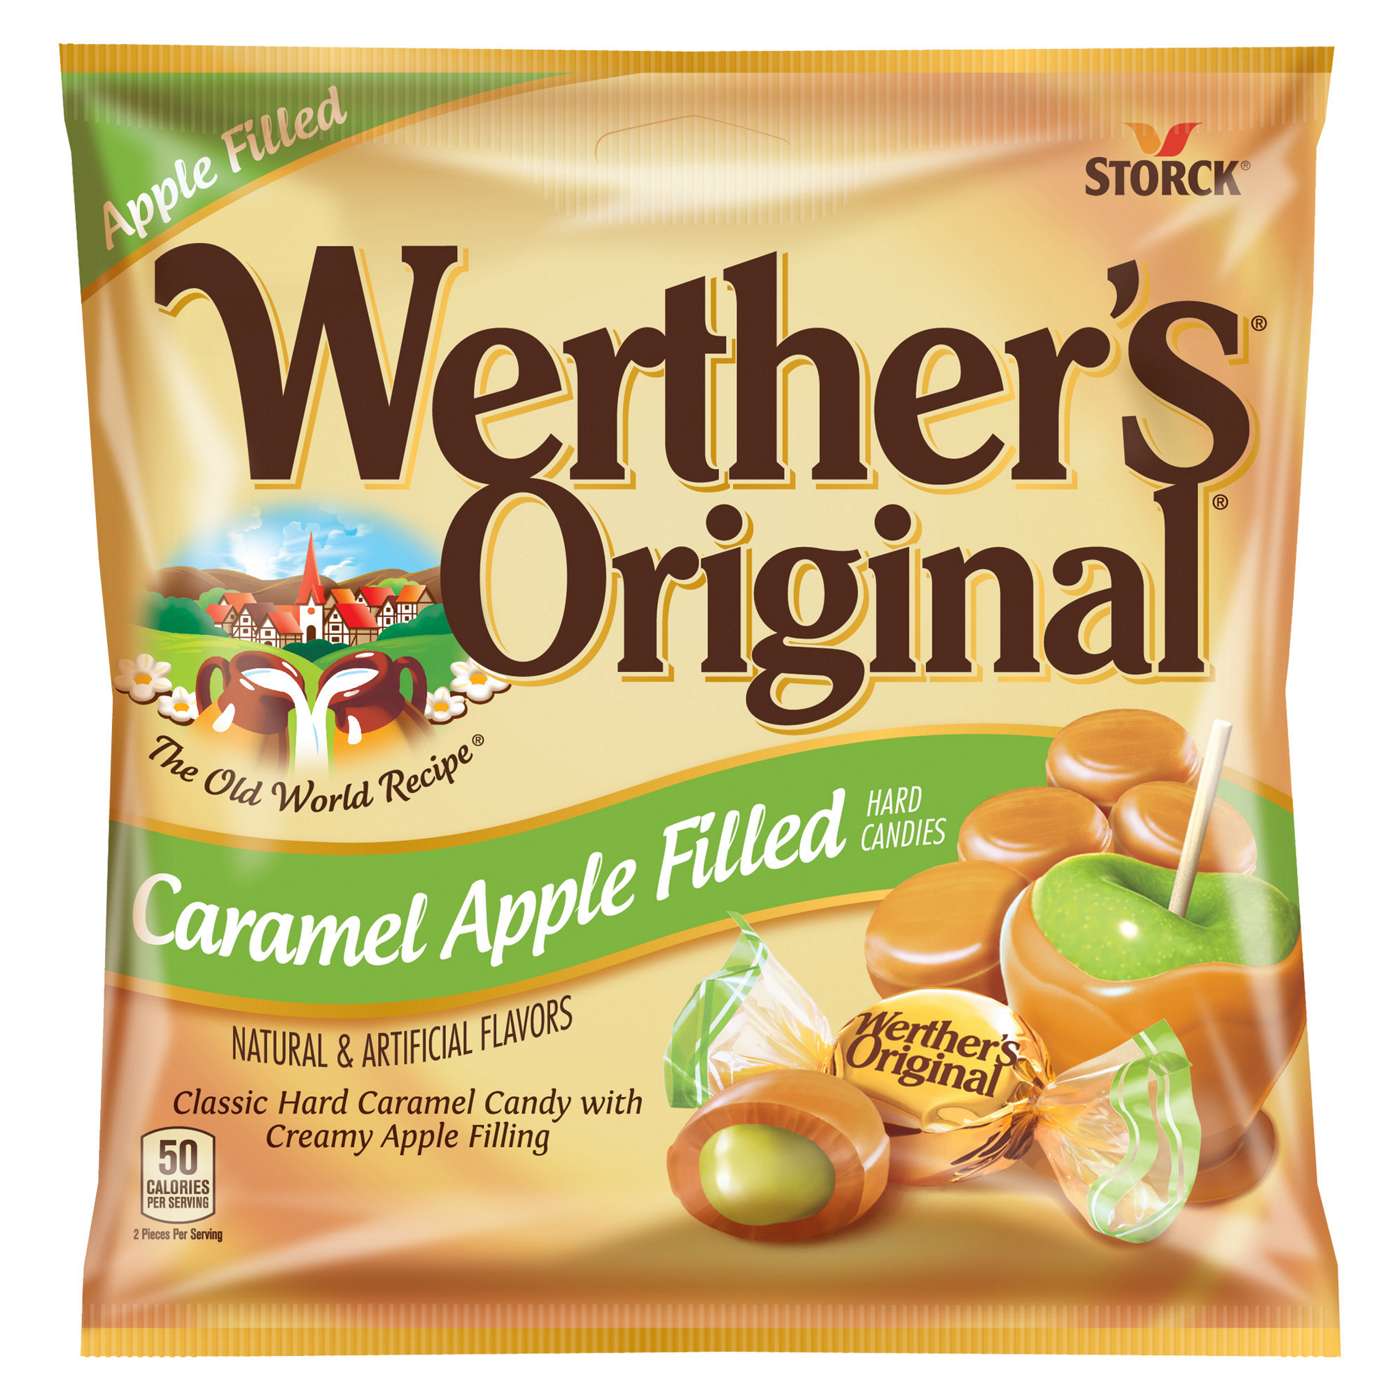 Werther's Original Hard Apple Filled Caramel Candy; image 1 of 6